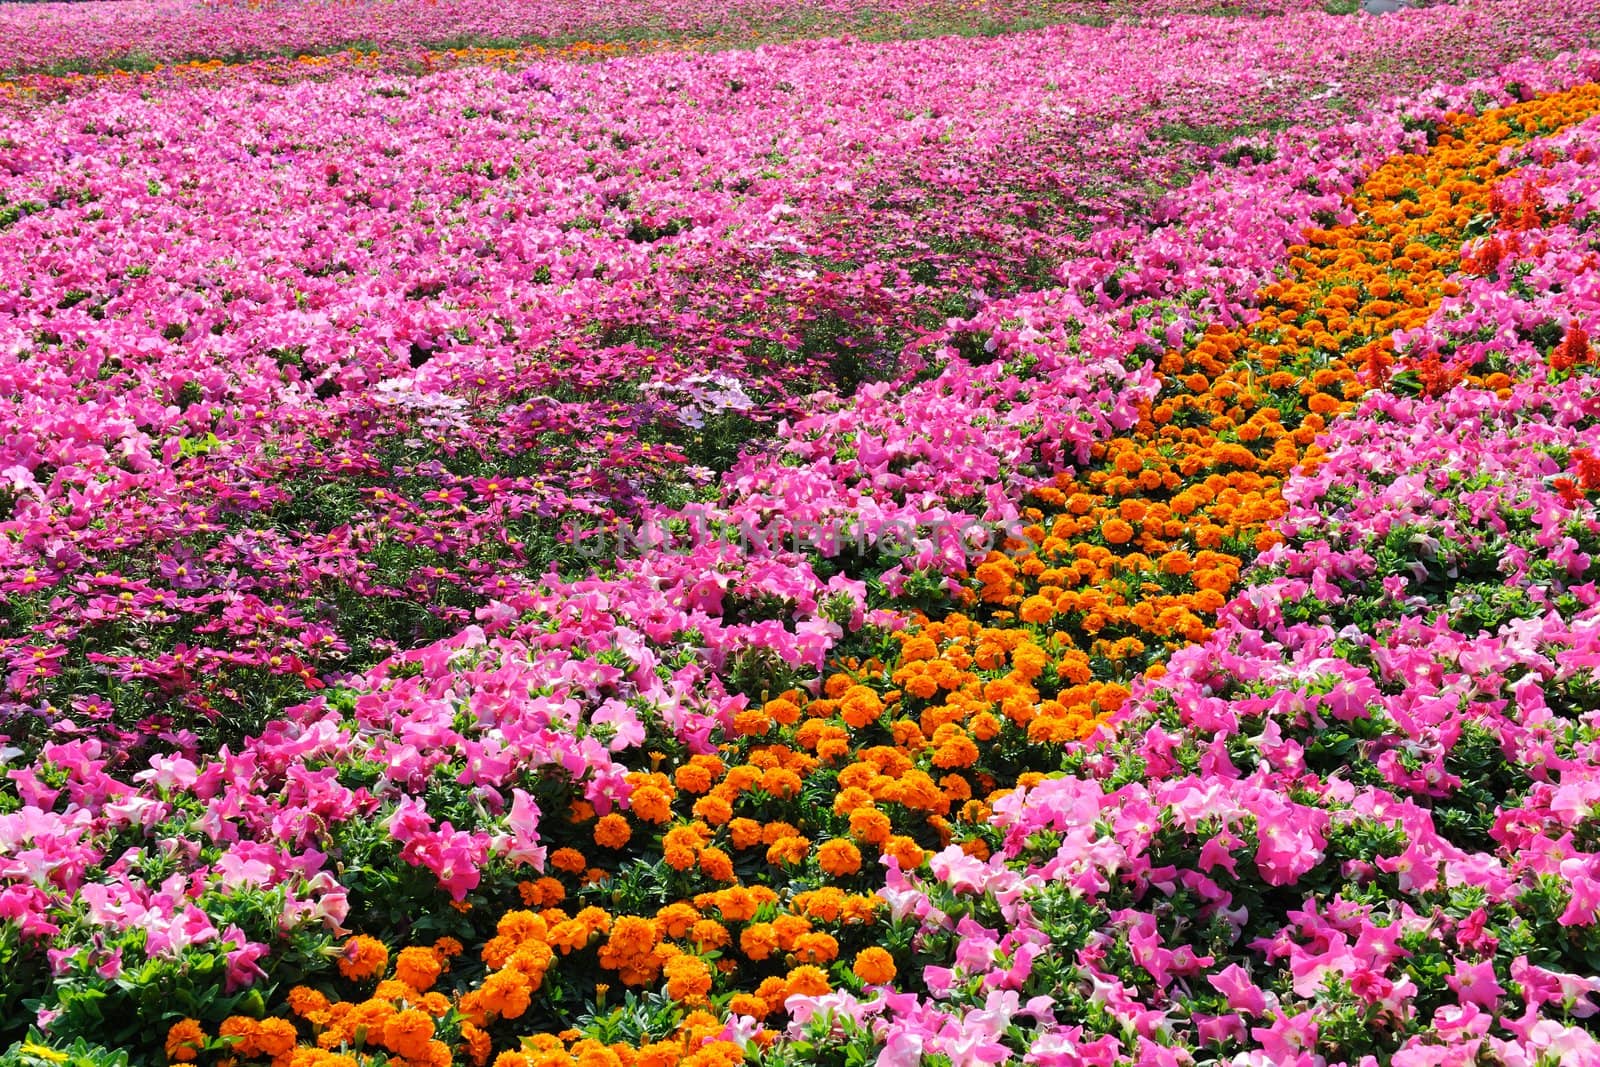 Garden full of many kinds of flowers